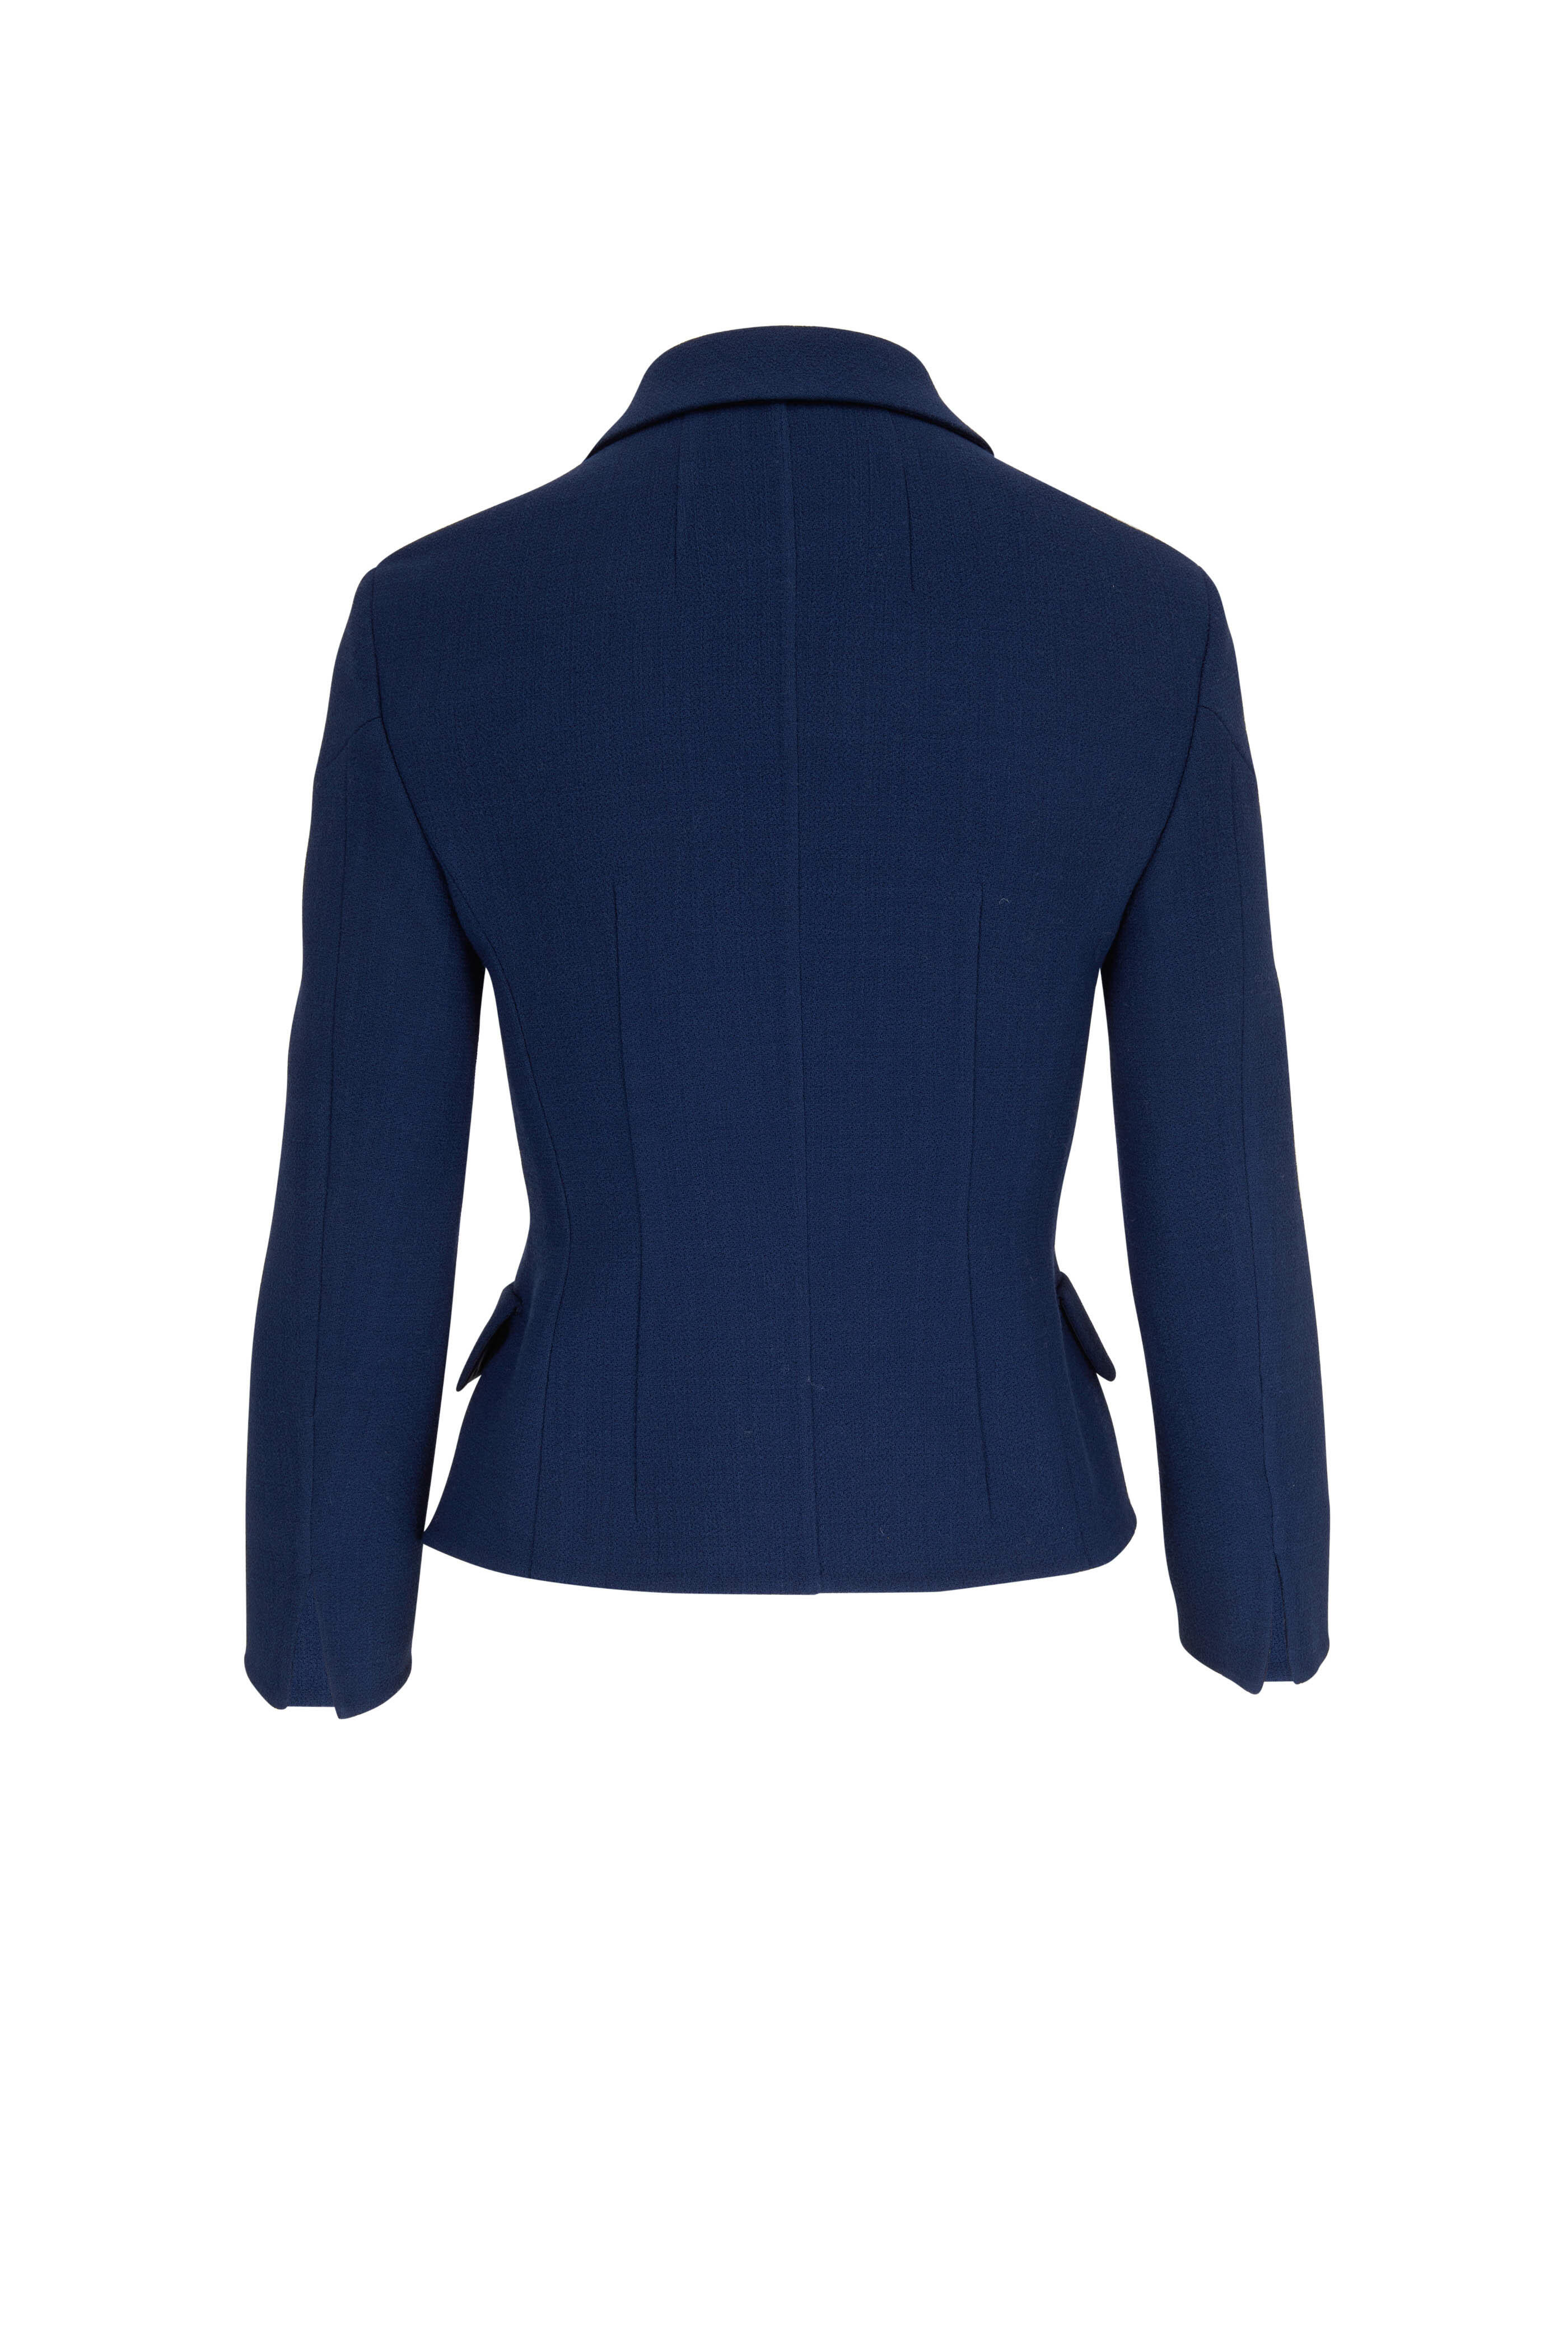 Akris - Petrol Blue Wool Three-Quarter Sleeve Short Jacket